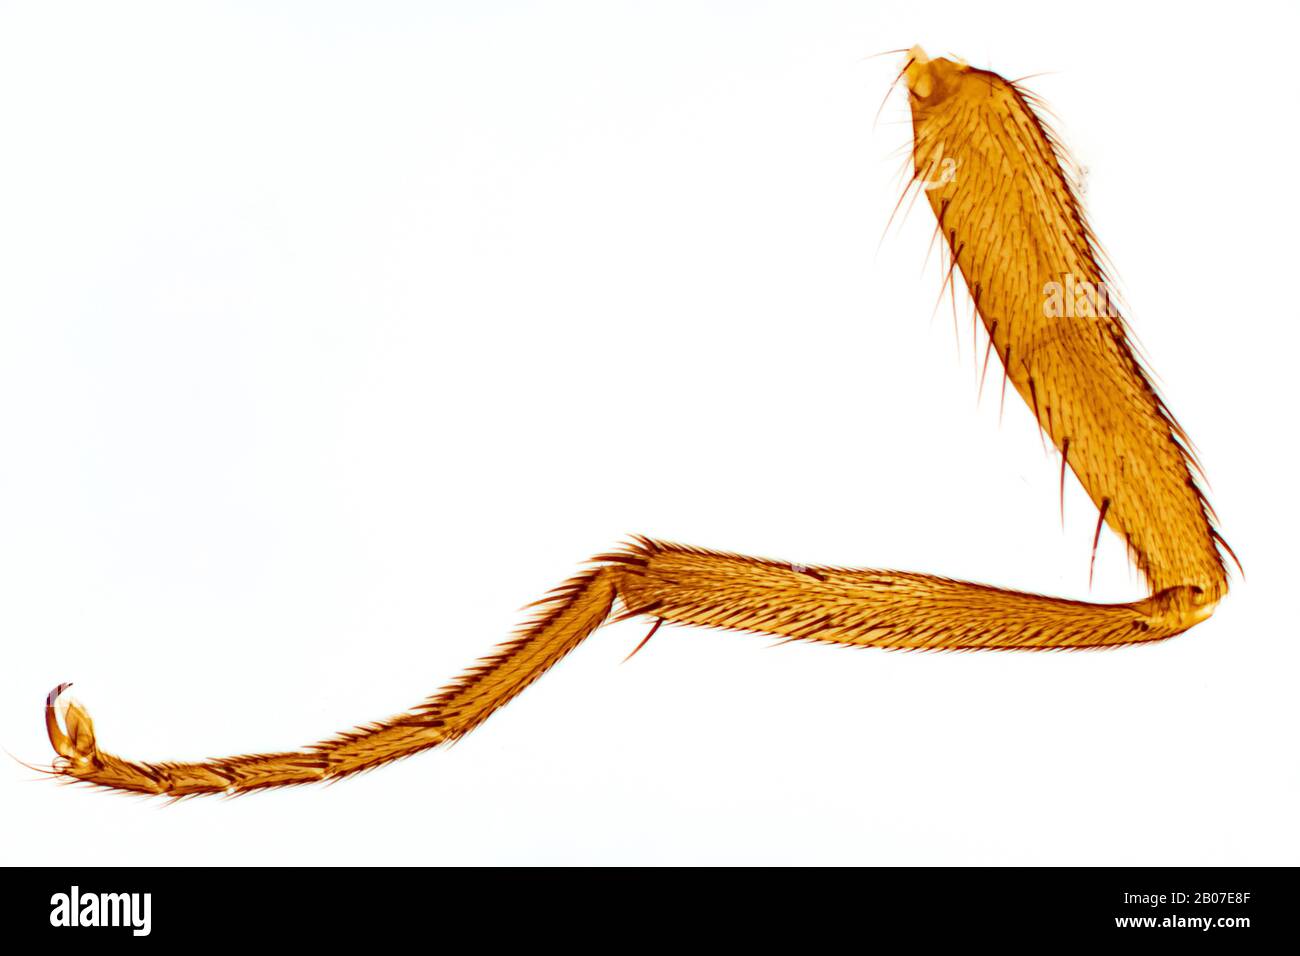 Mosca doméstica (Musca domestica), pierna de una mosca doméstica, foto de microscopio, Alemania Foto de stock